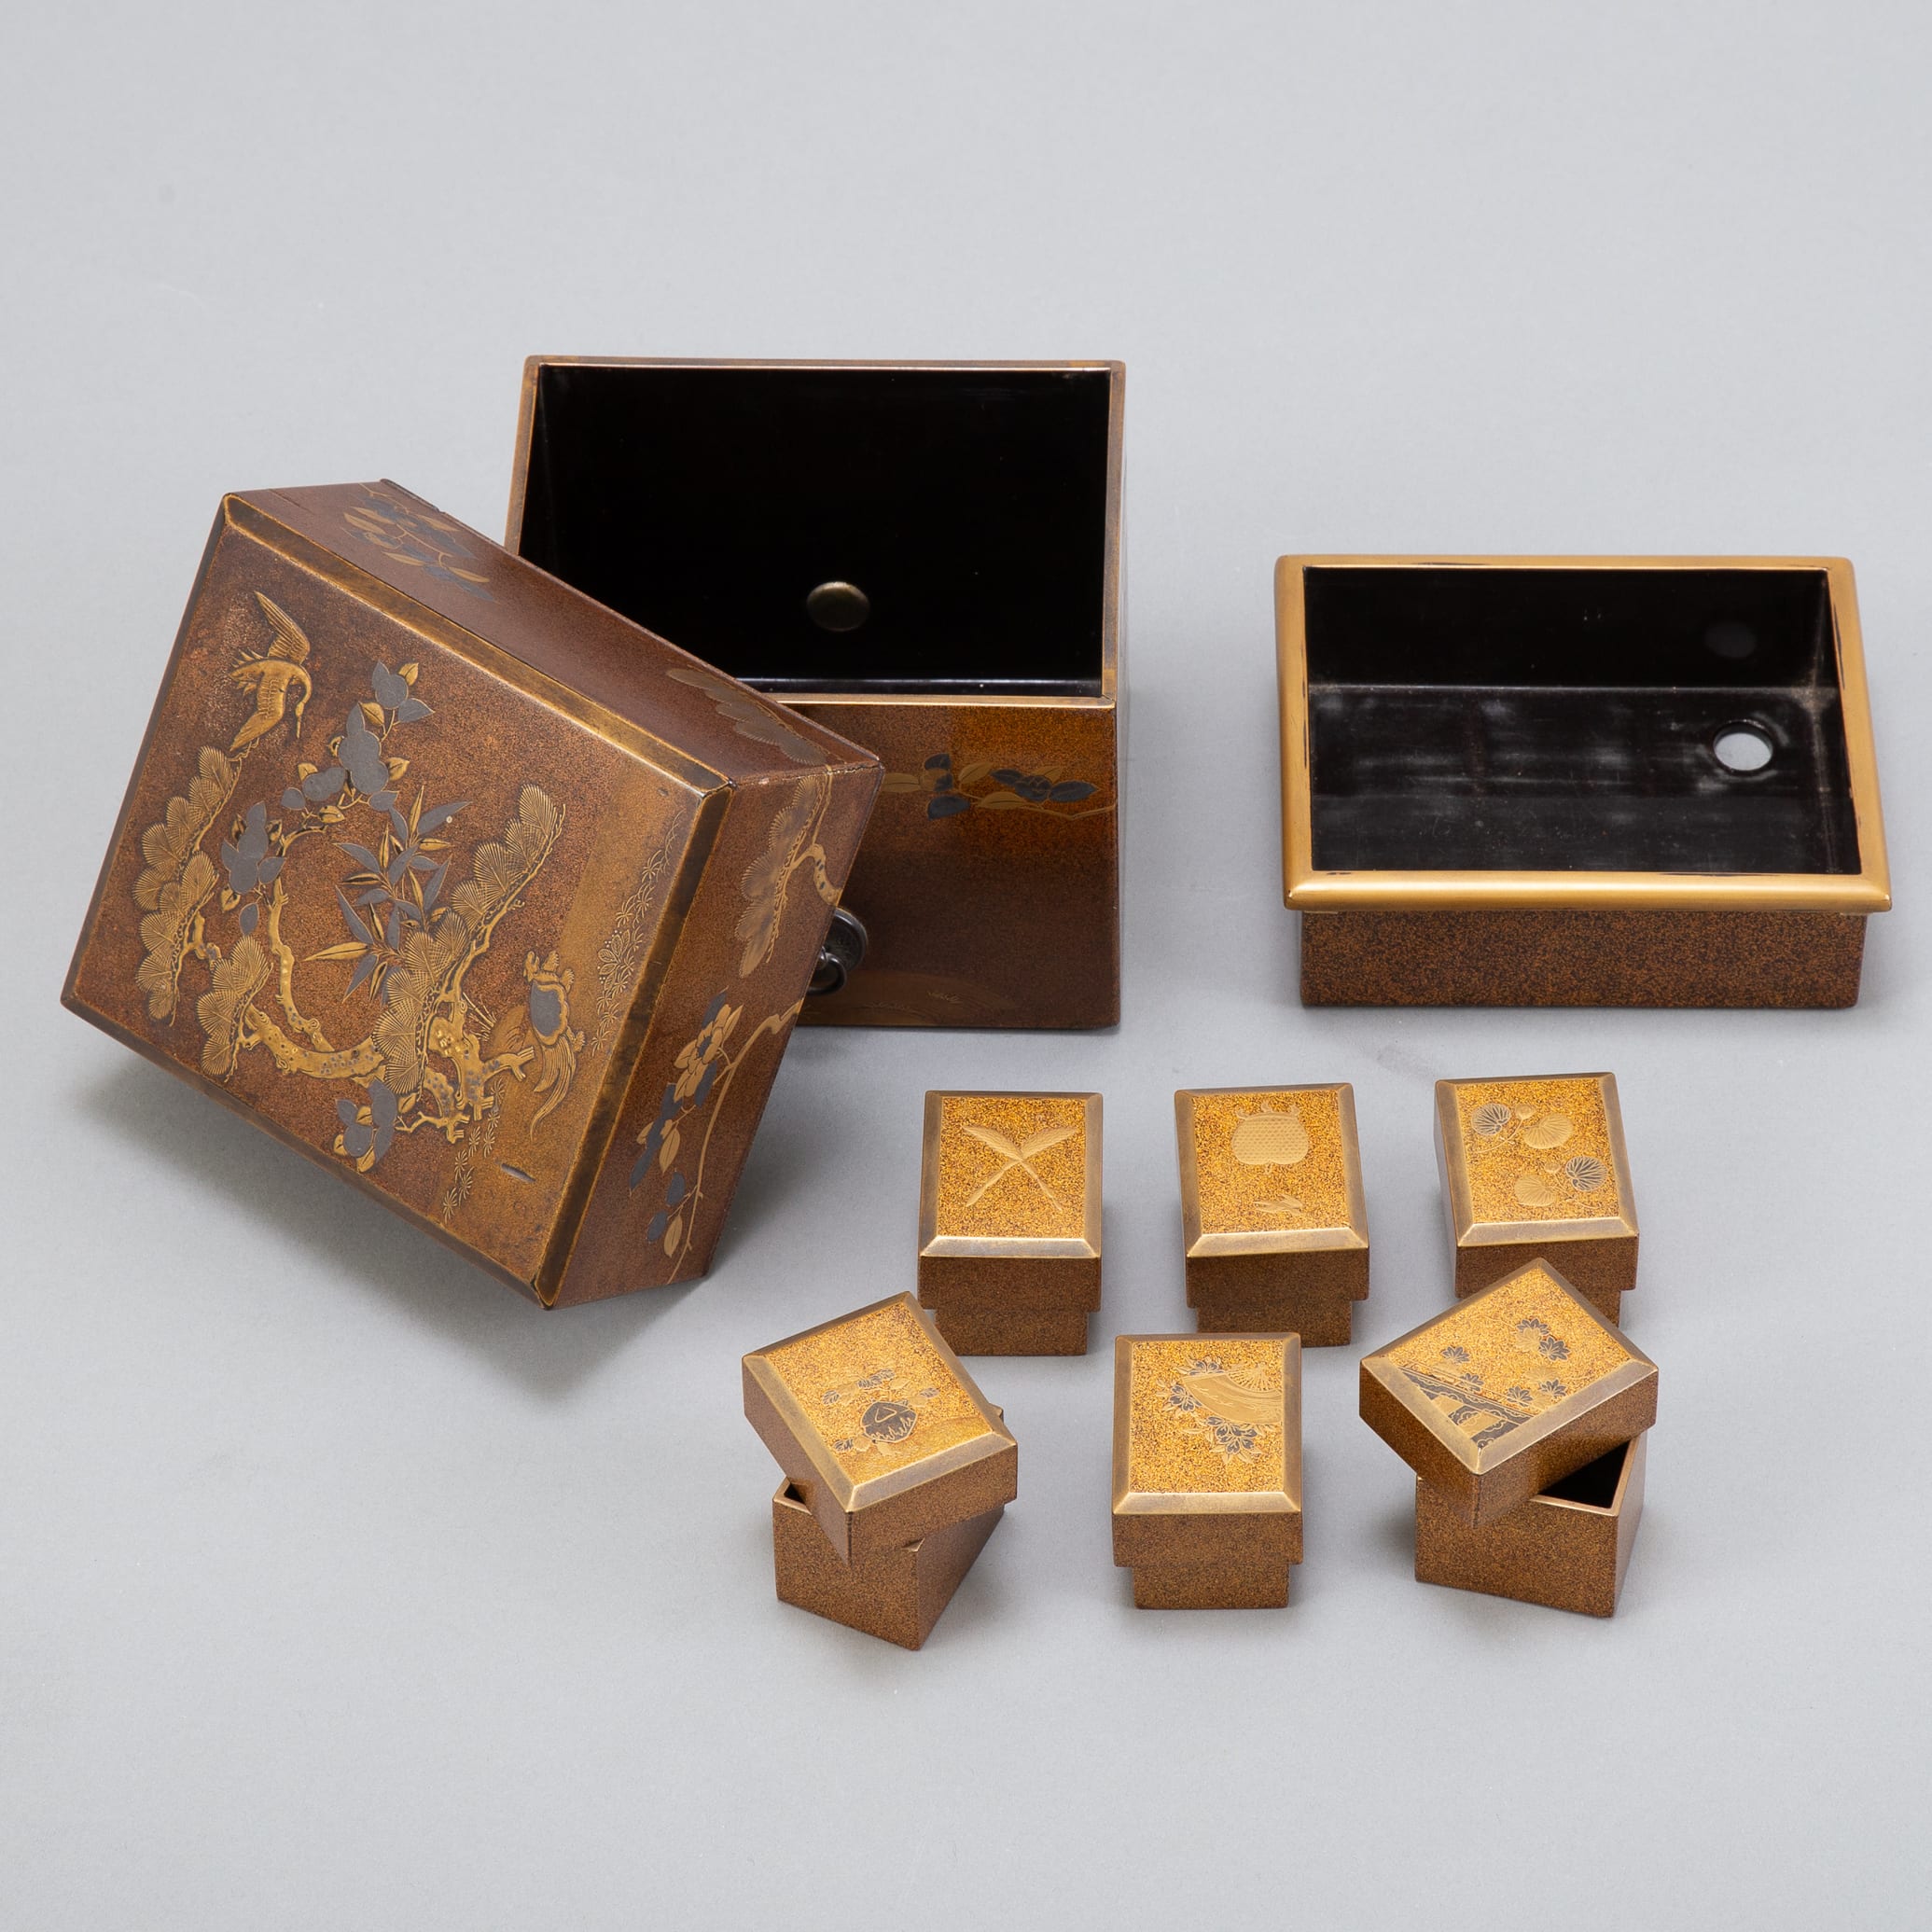 Lot 052: Stunning Meiji or Edo Lacquer Box - Sent Game